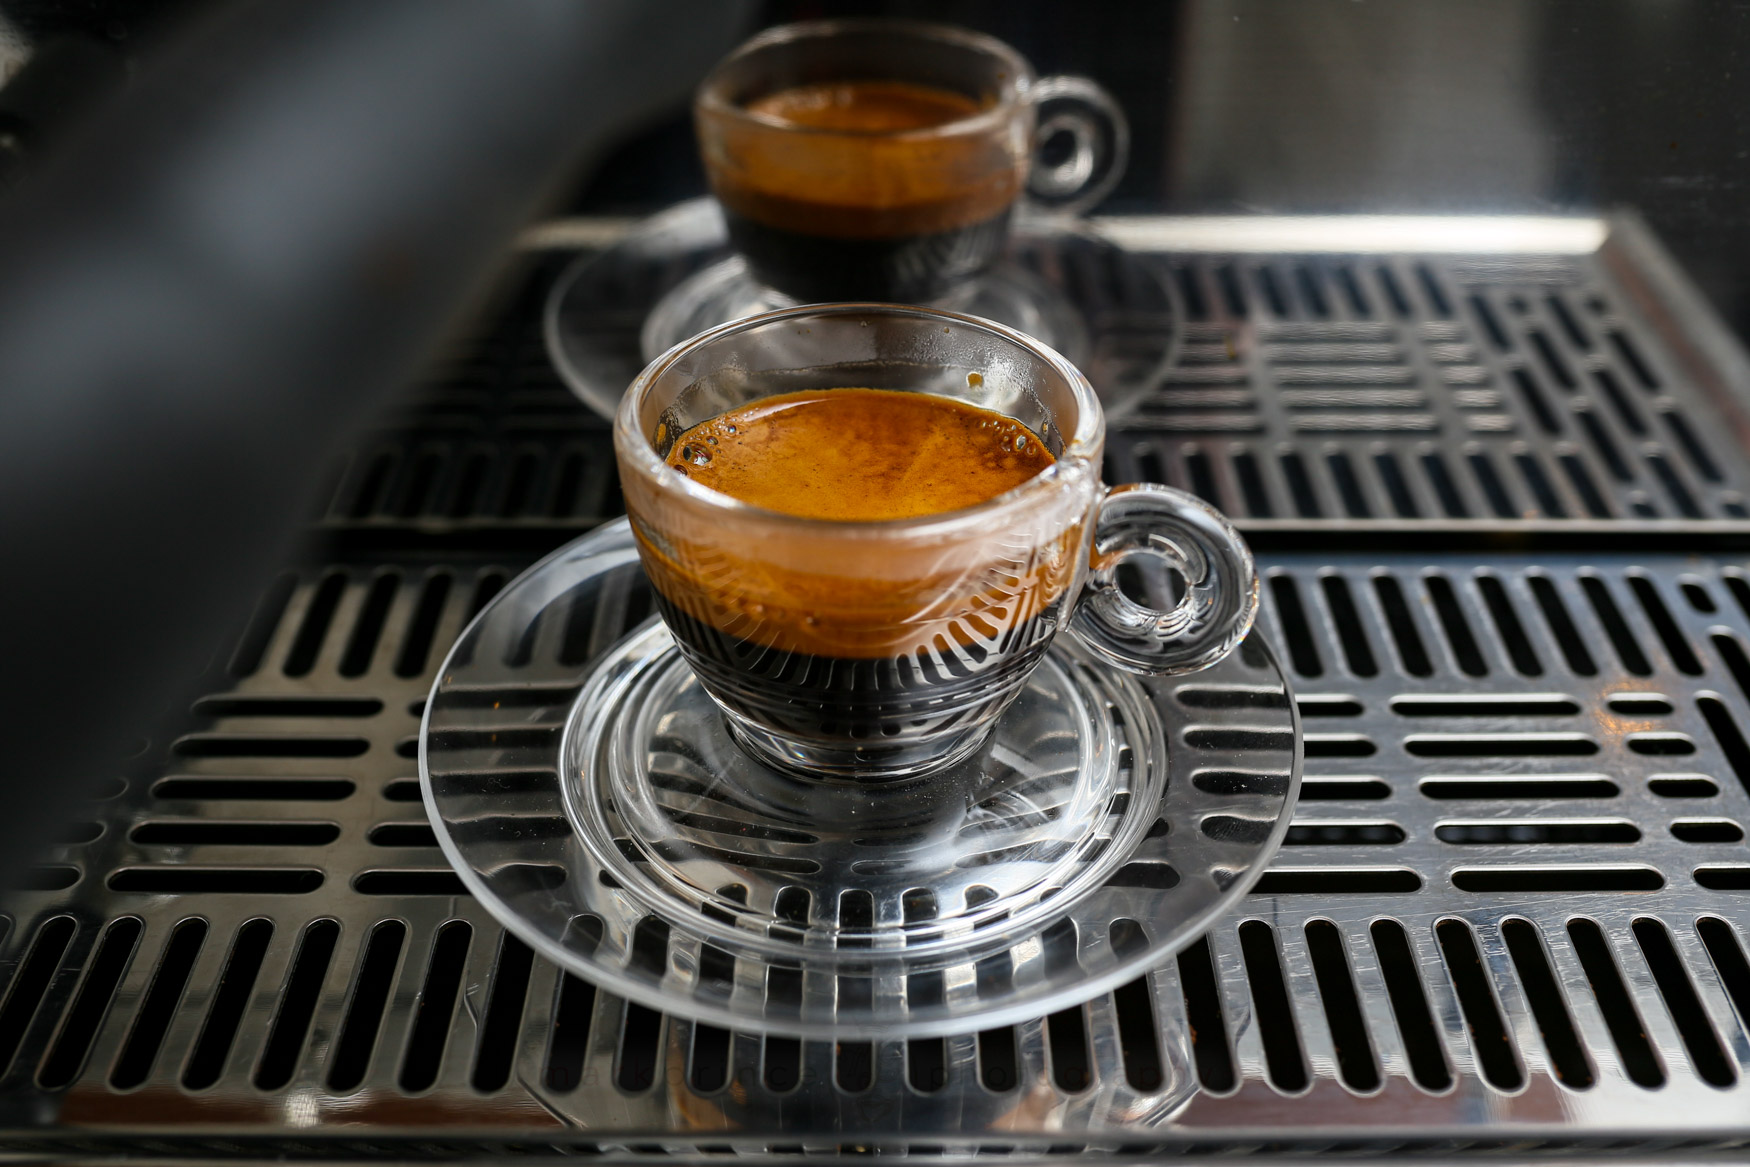 Explore Our Authentic Espresso Collection